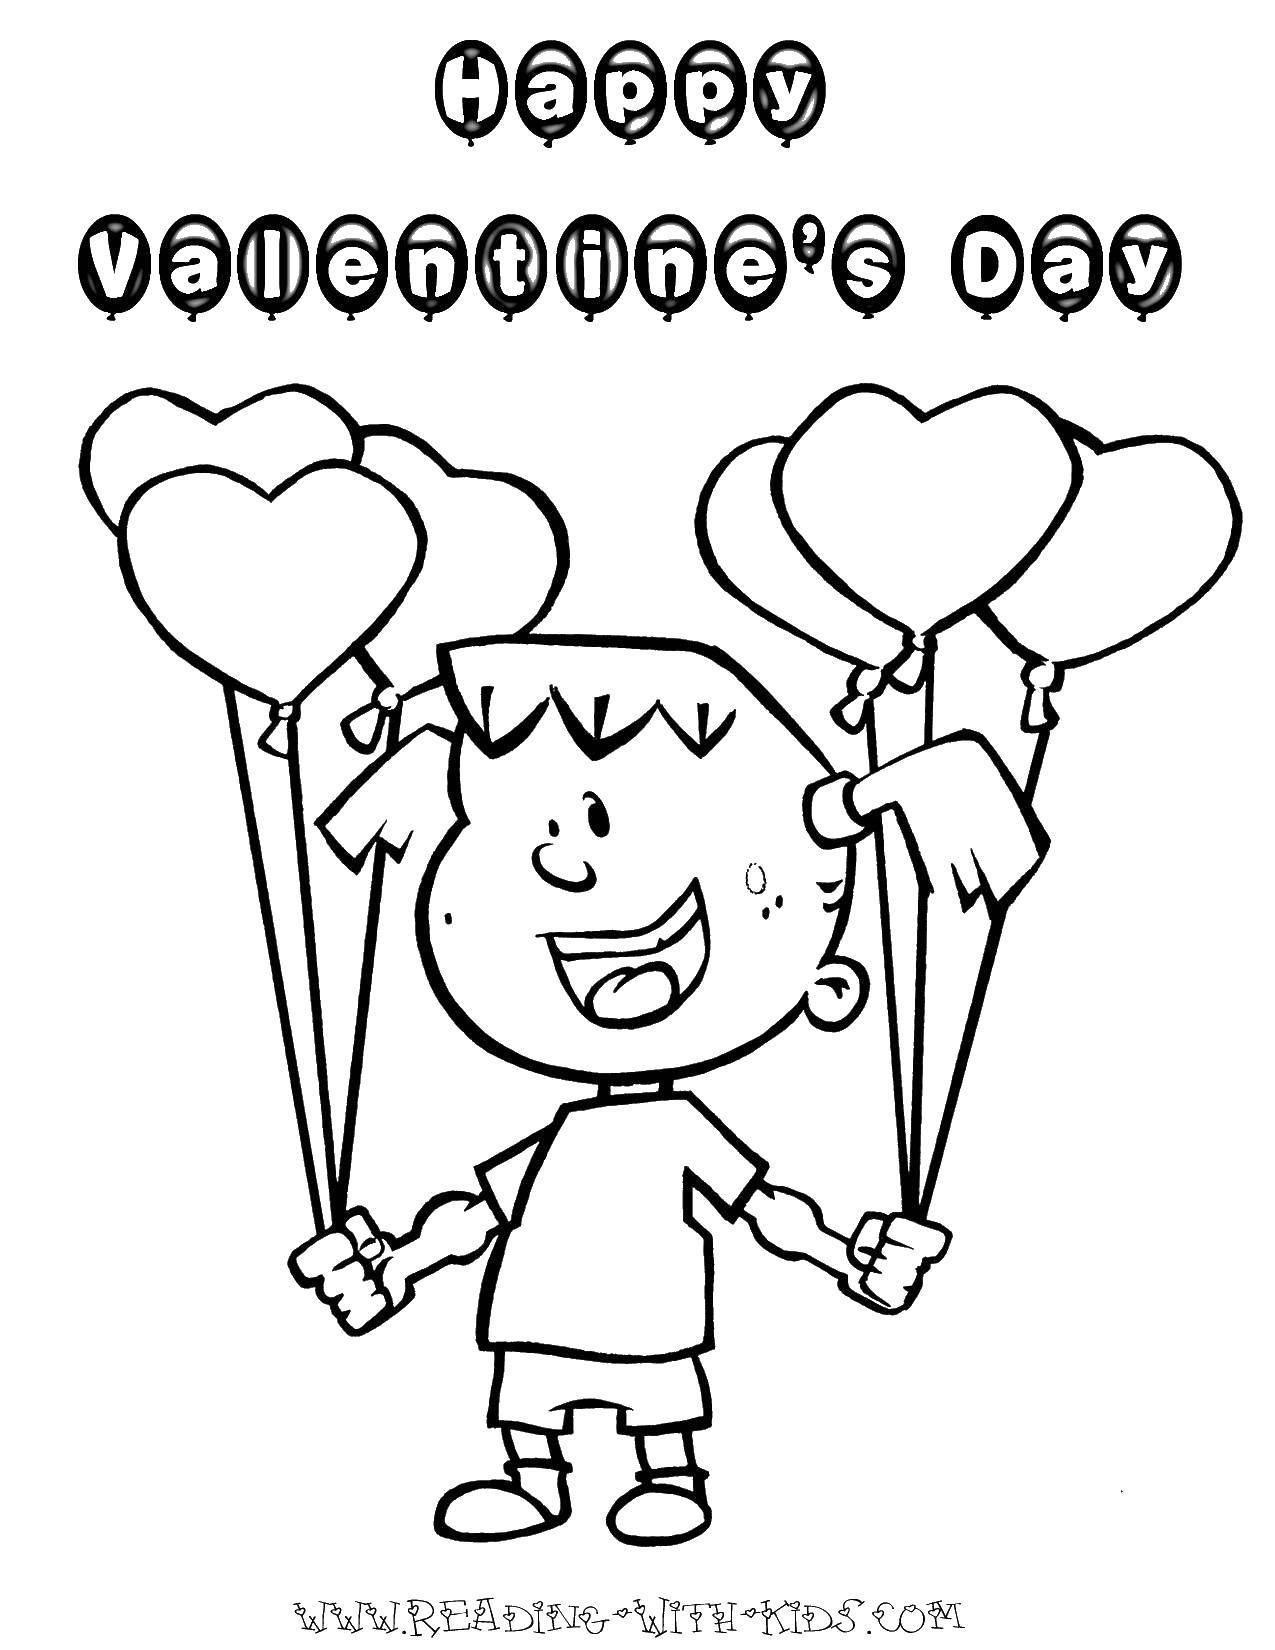 Название: Раскраска Девочка с шариками. Категория: День святого валентина. Теги: девочка, шарики.